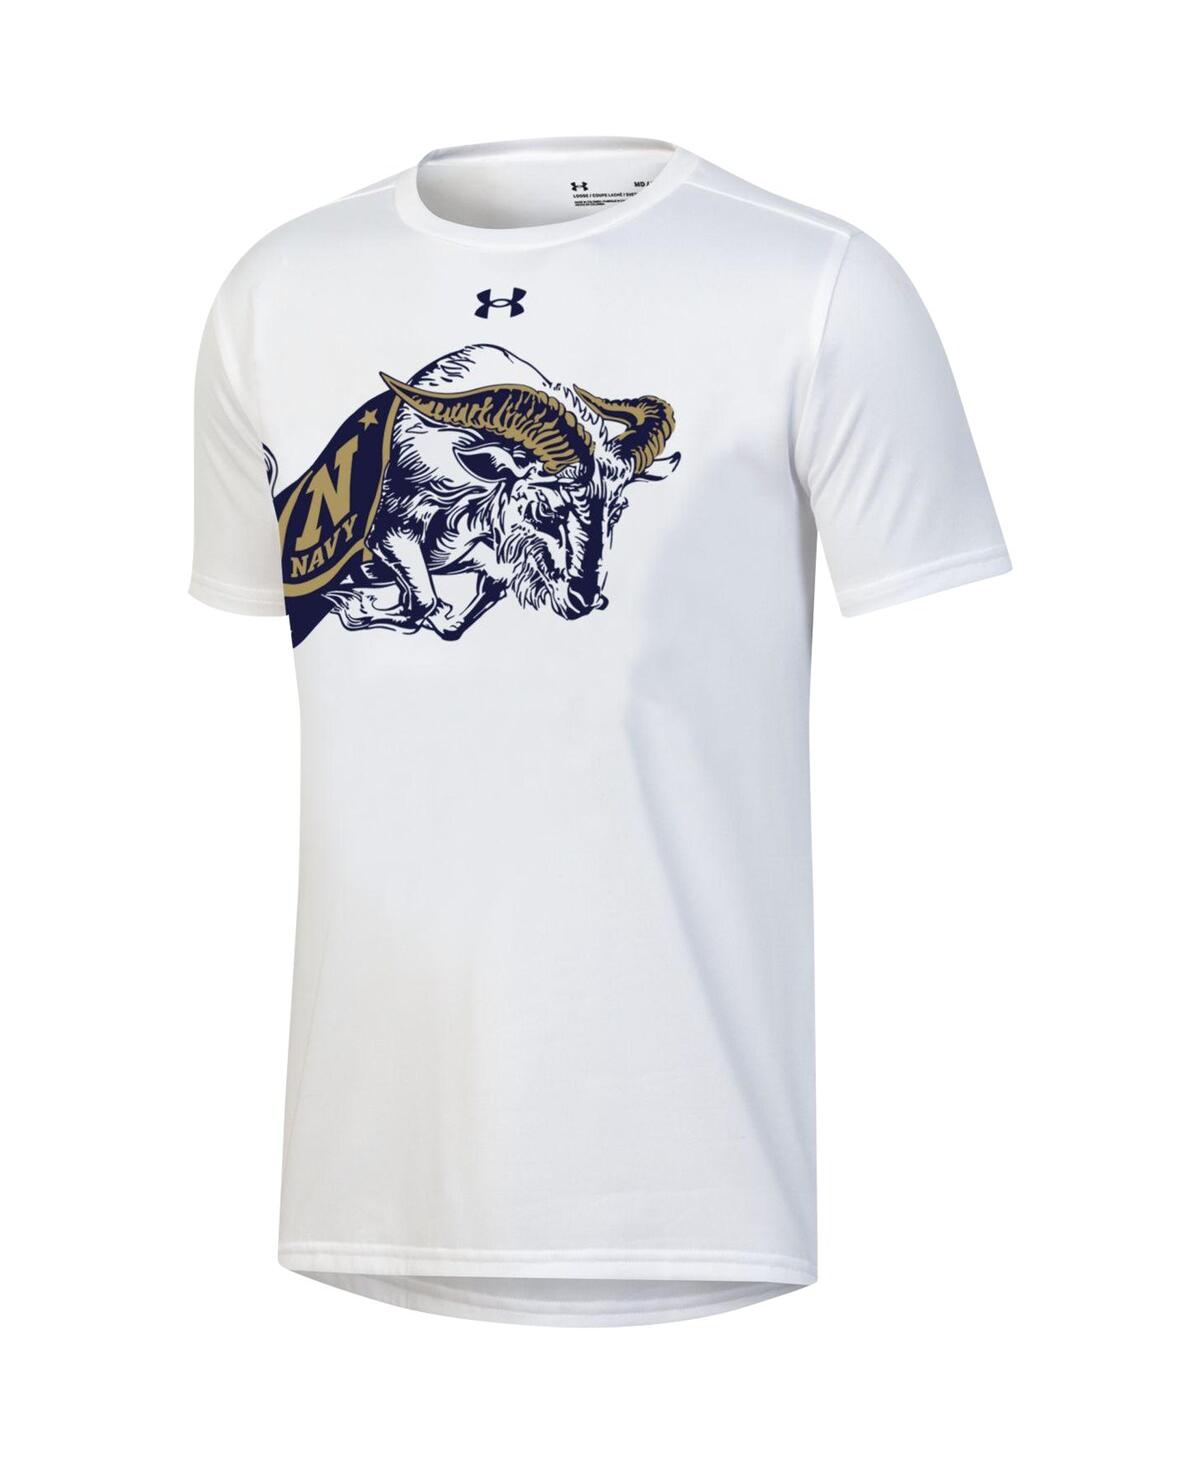 Shop Under Armour Big Boys  White Navy Midshipmen Gameday Oversized Logo Performance T-shirt